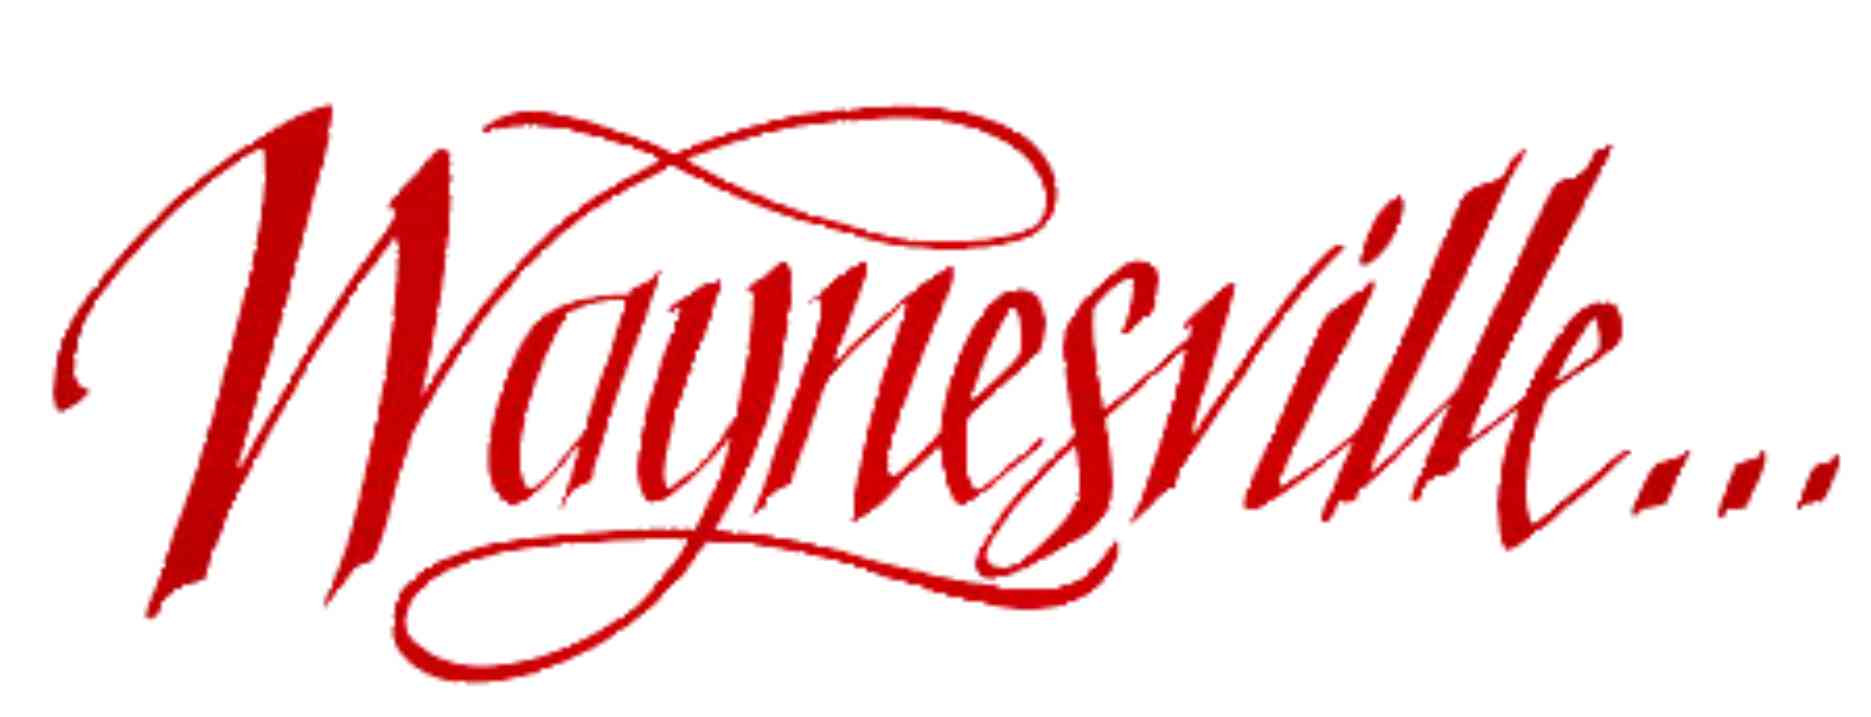 waynesville script logo